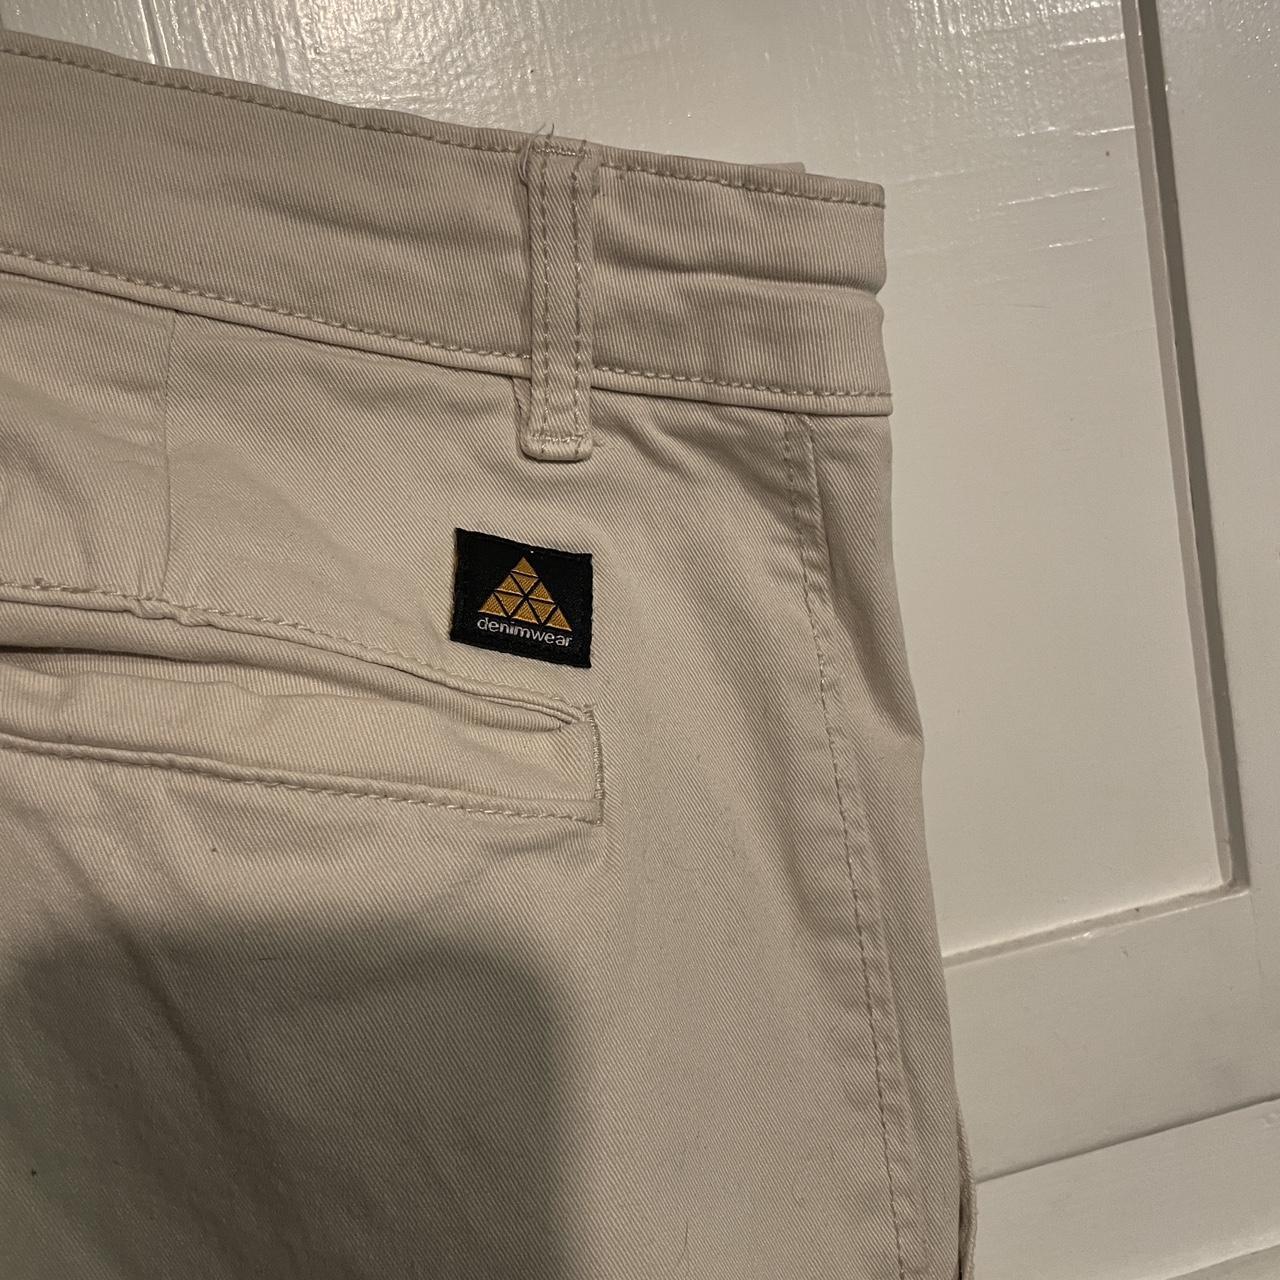 Beige/light tan Zara cargo pants - Depop